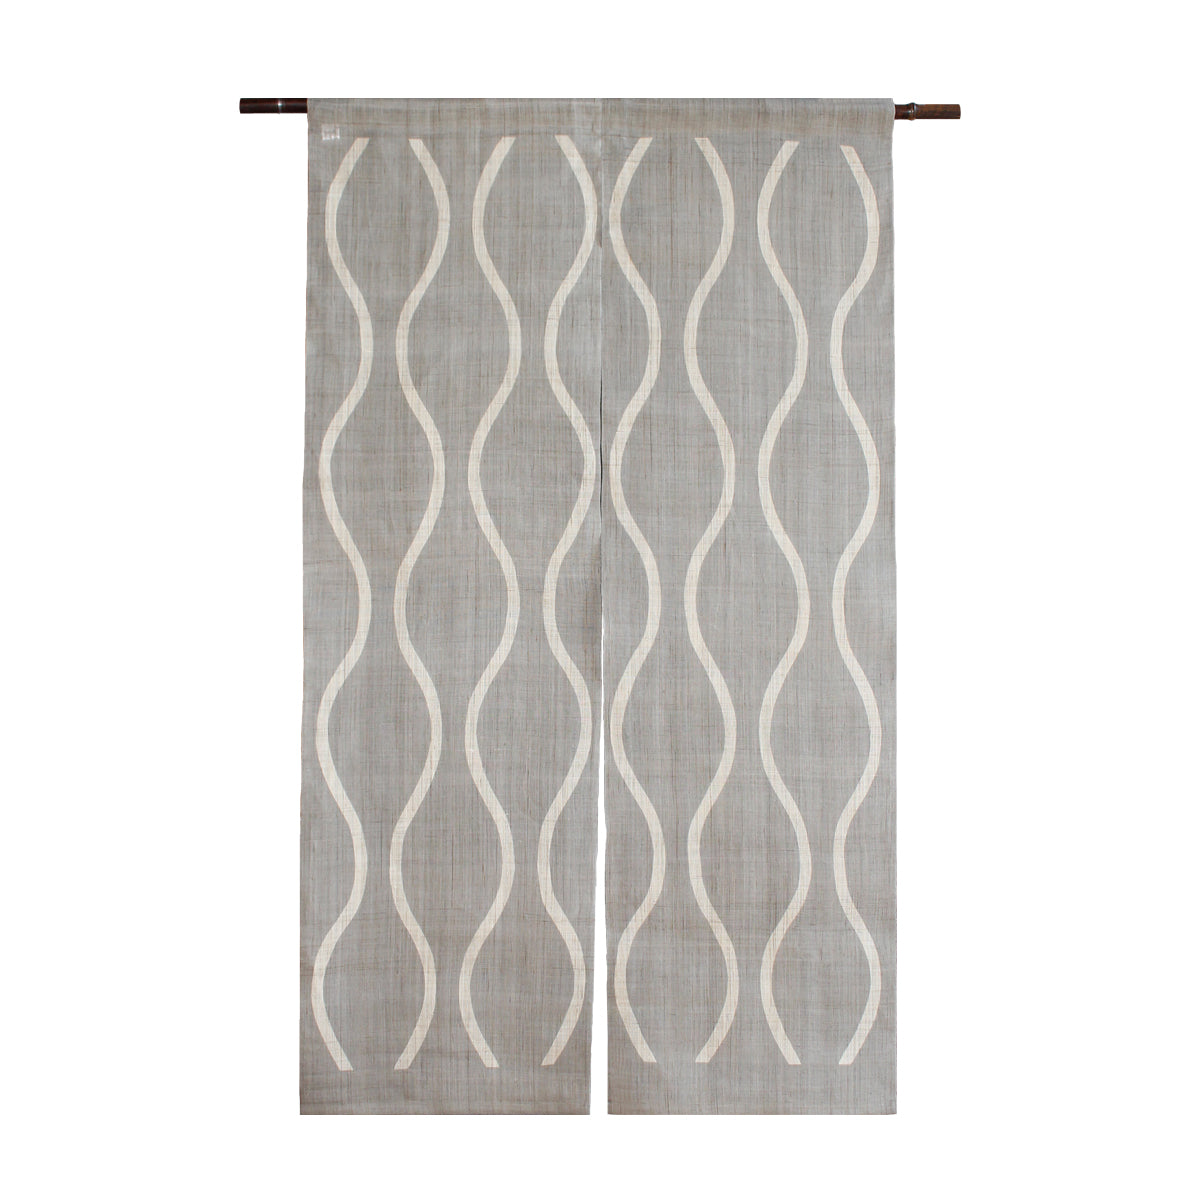 Japanese Curtain (Noren) / Ramie / Tatewaku / Grey / W84xH150cm